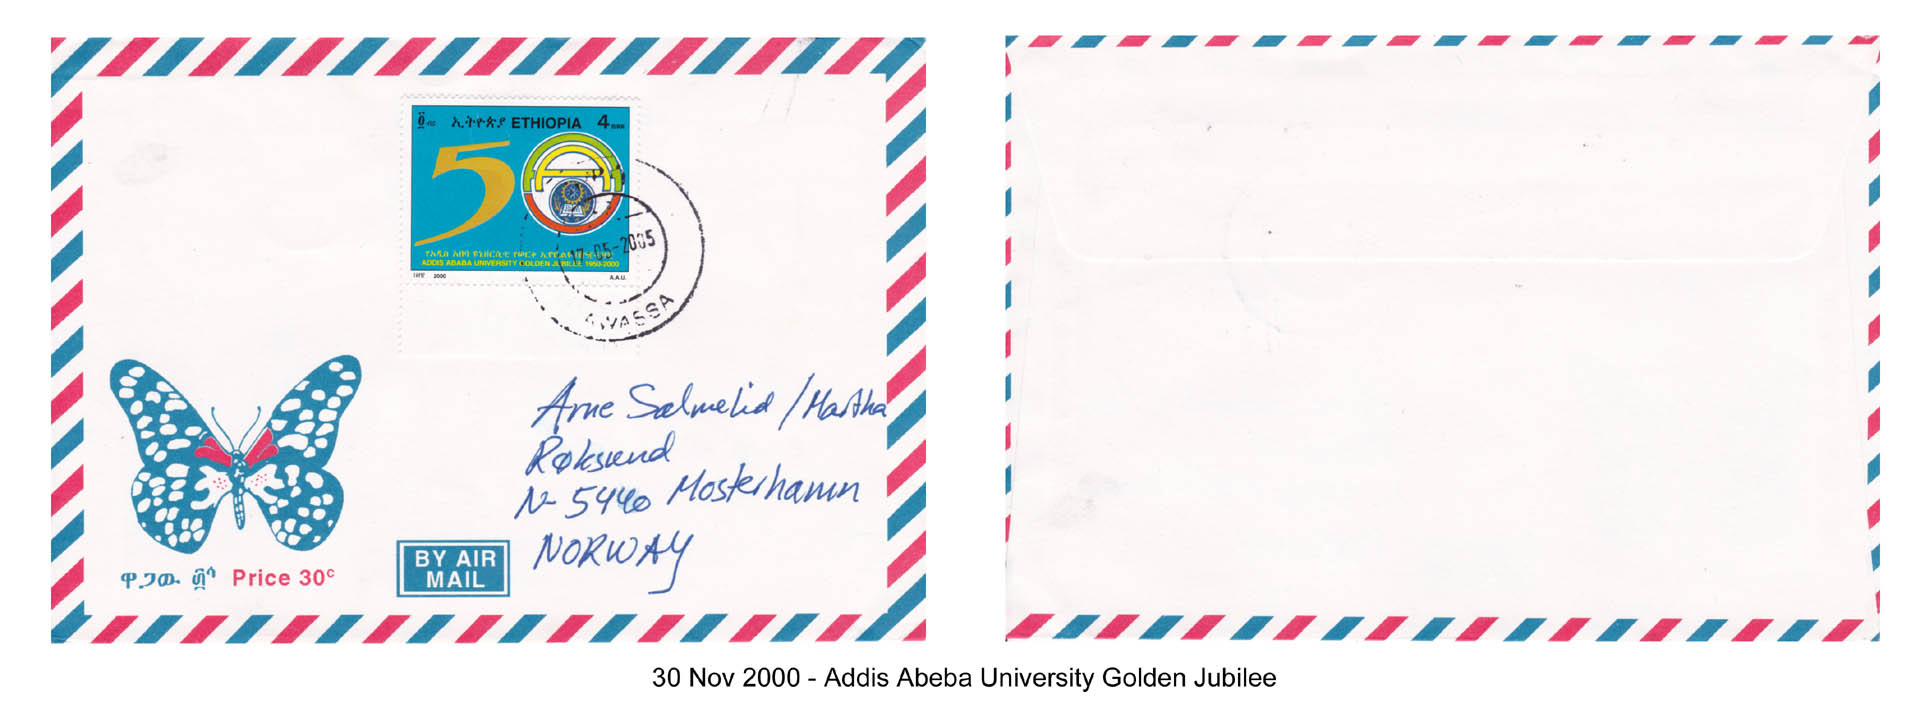 20001130 – Addis Abeba University Golden Jubilee